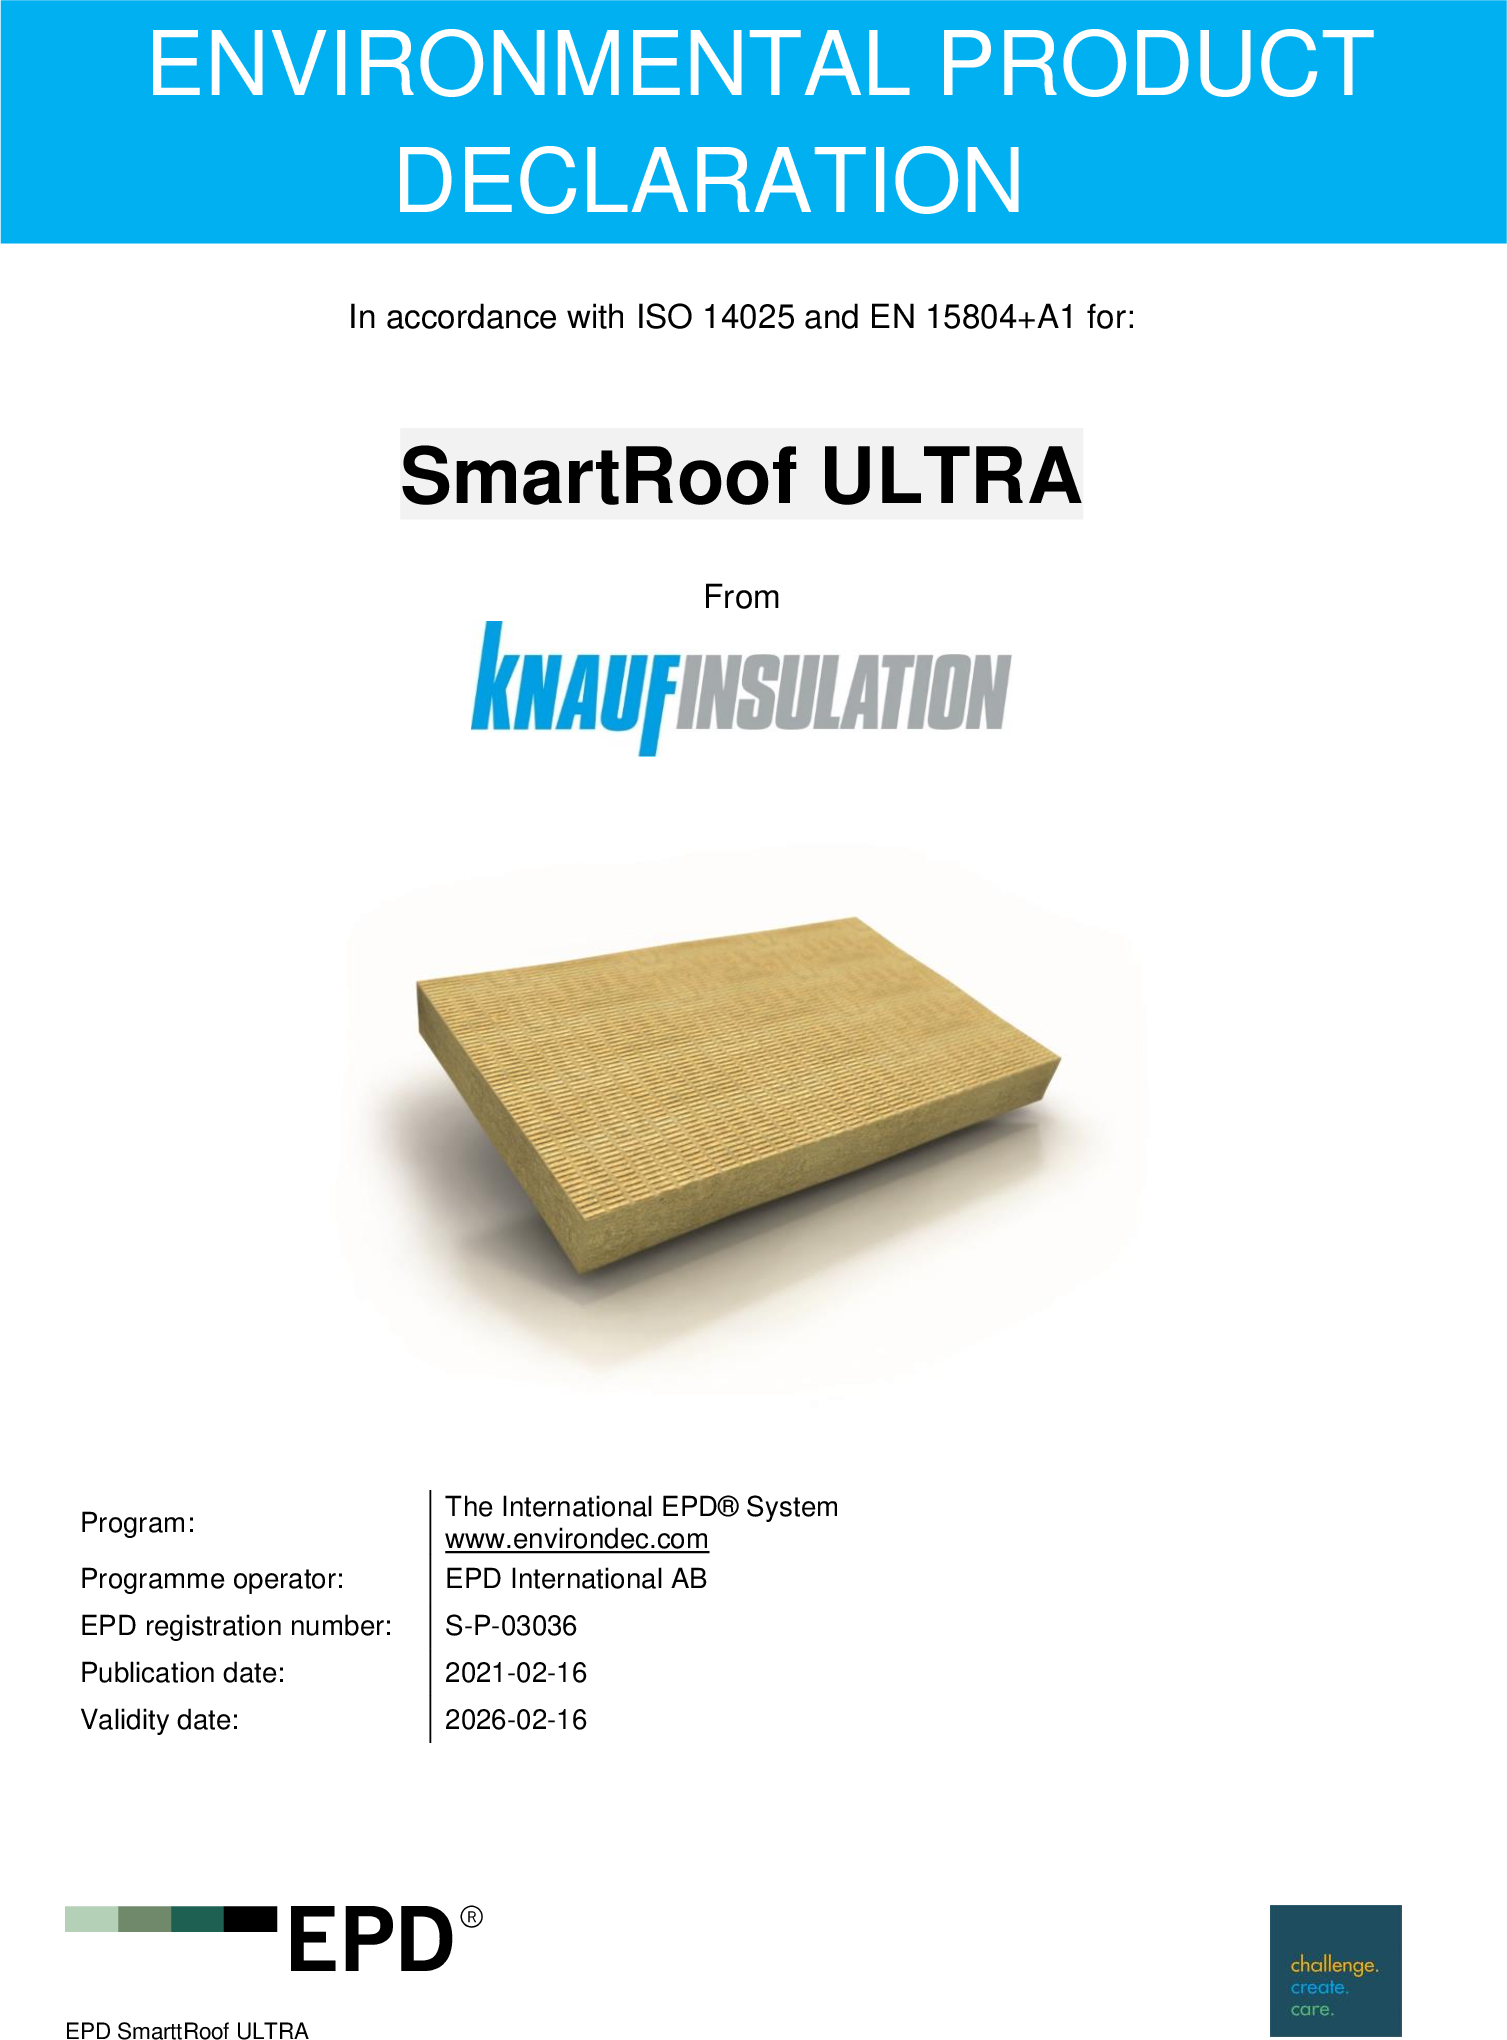 SmartRoof Ultra